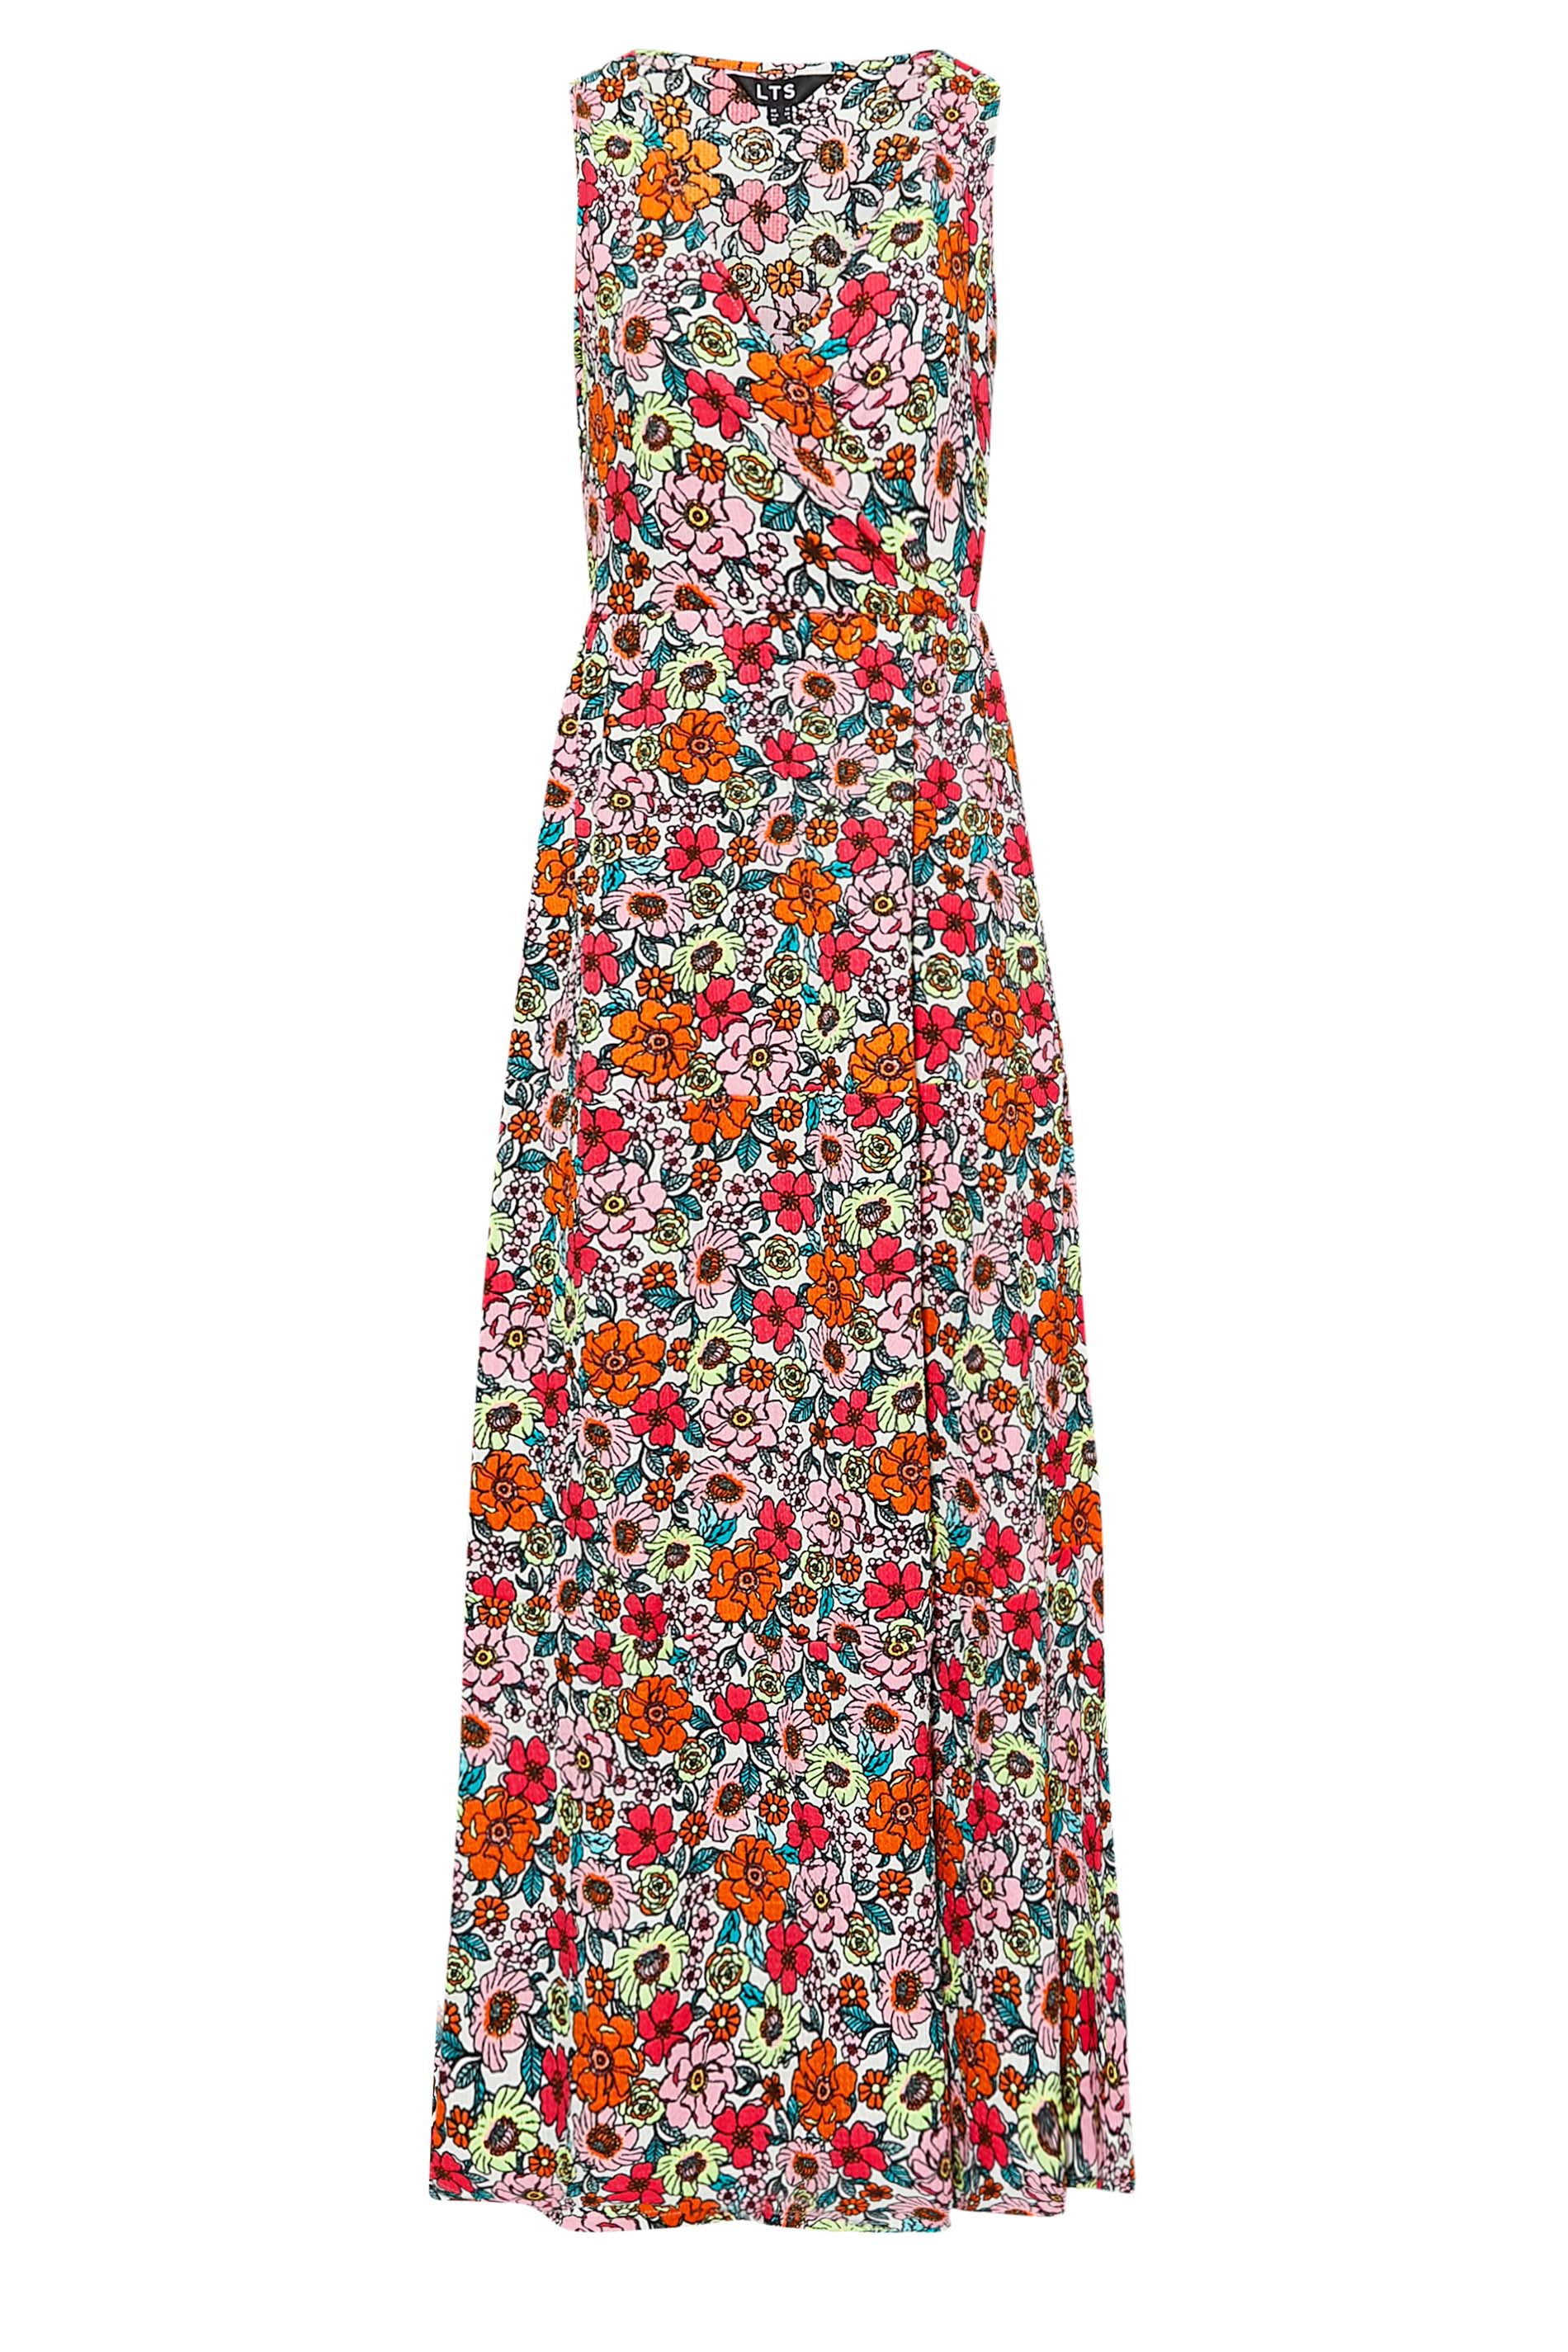 LTS Tall Women's Red Floral Print Maxi Dress | Long Tall Sally 3